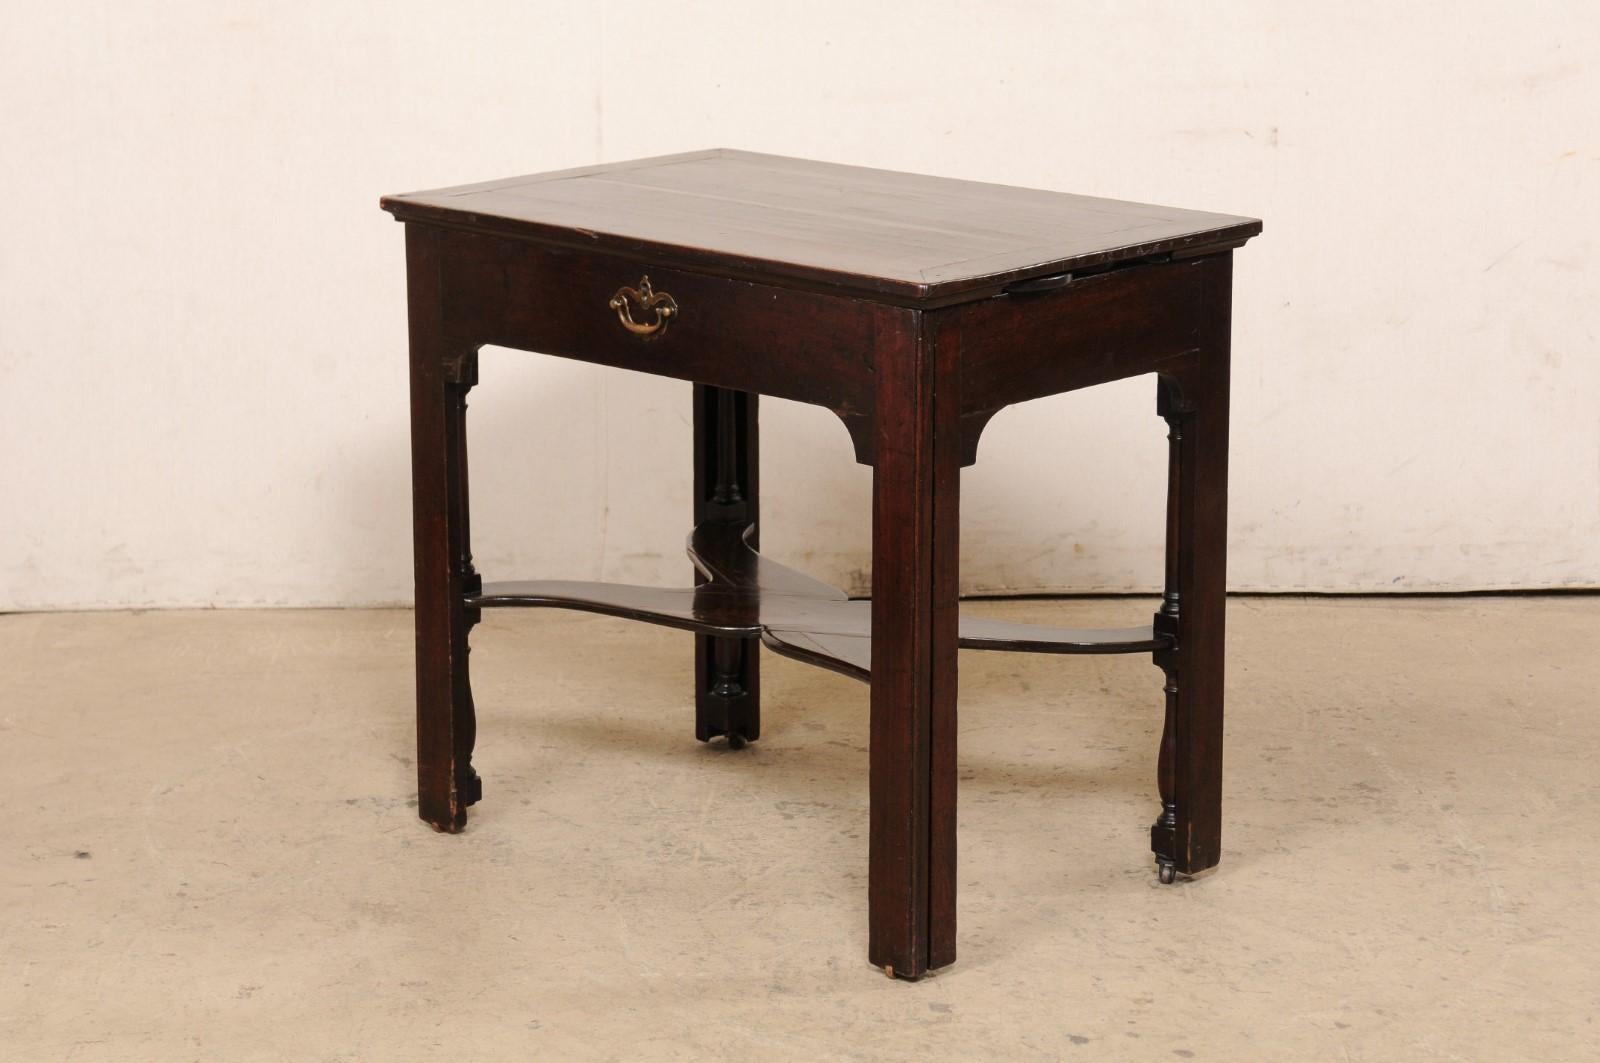 18th C. English Architect's Table w/Unique Legs, Expanding Top, & Candle Shelves For Sale 6